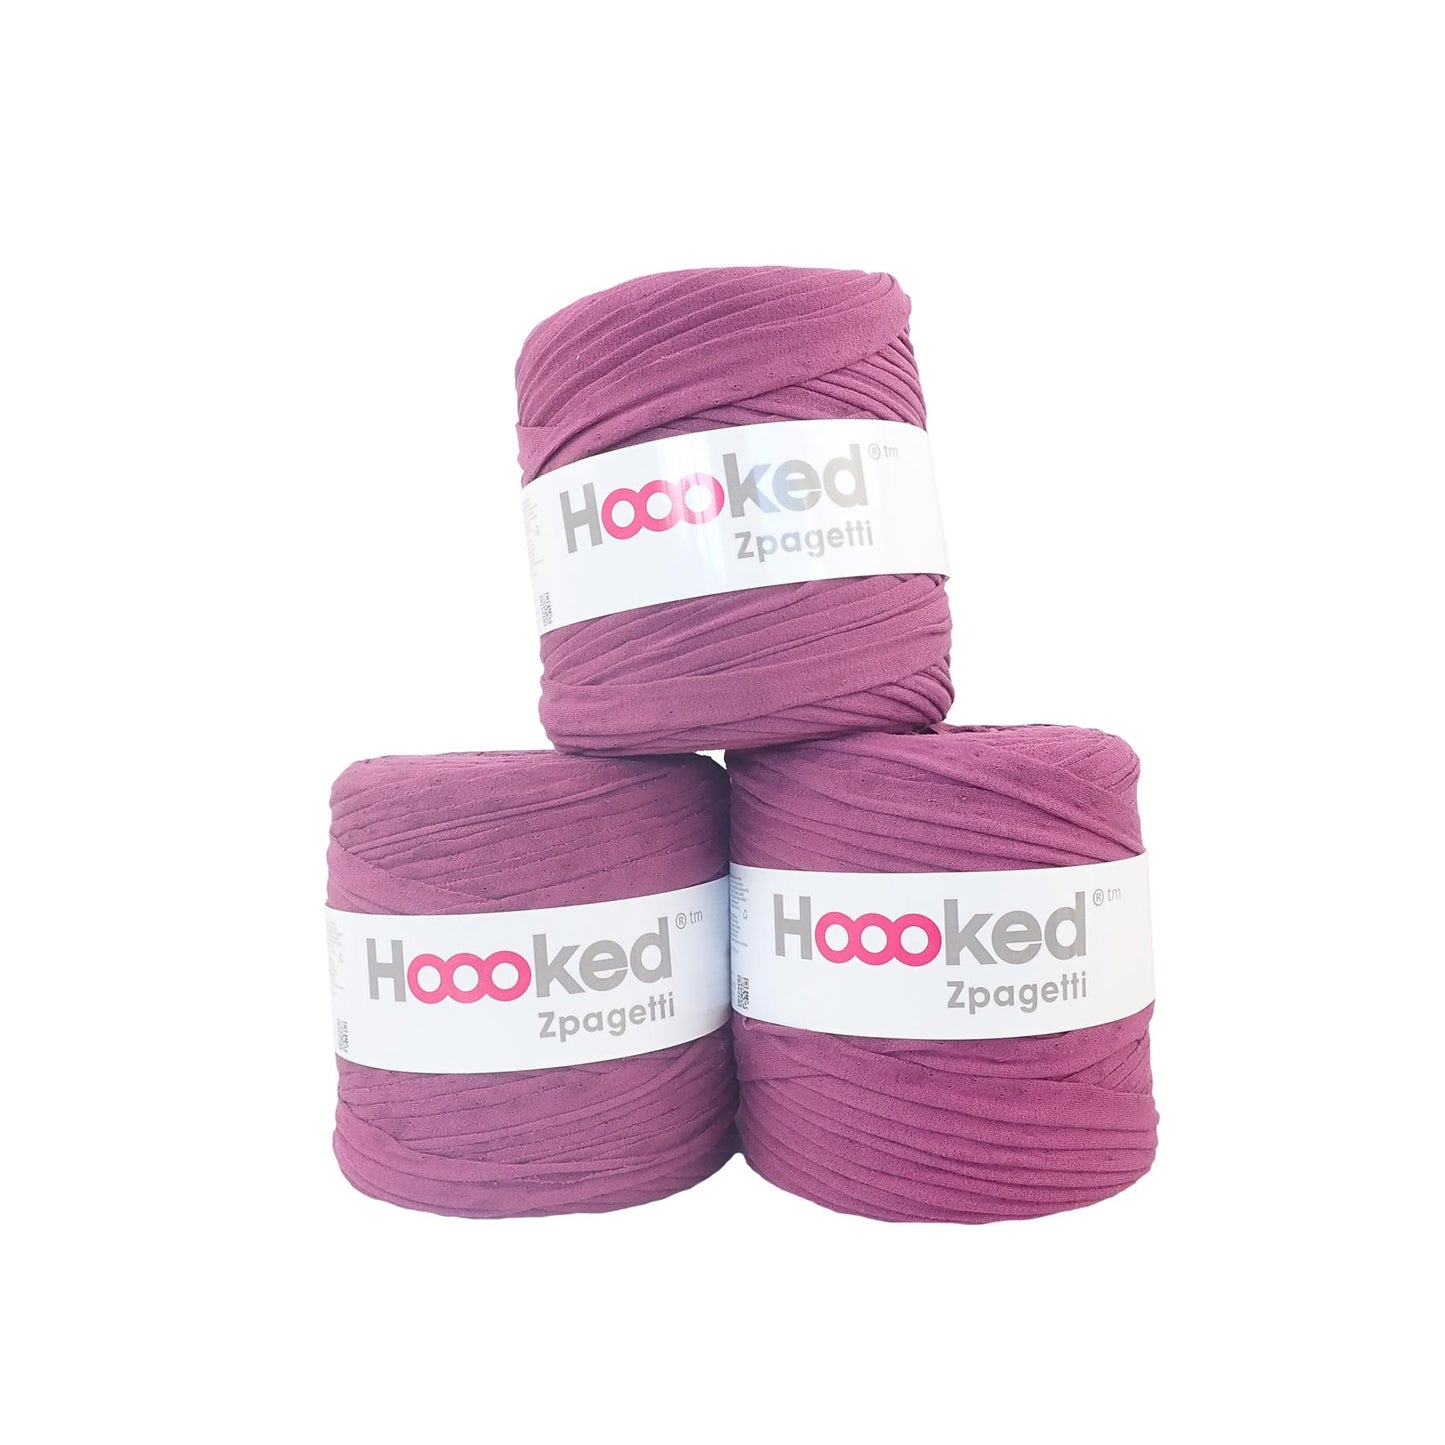 Hoooked Zpagetti Grape Purple Cotton T-Shirt Yarn - 120M 700g (Pack of 3)